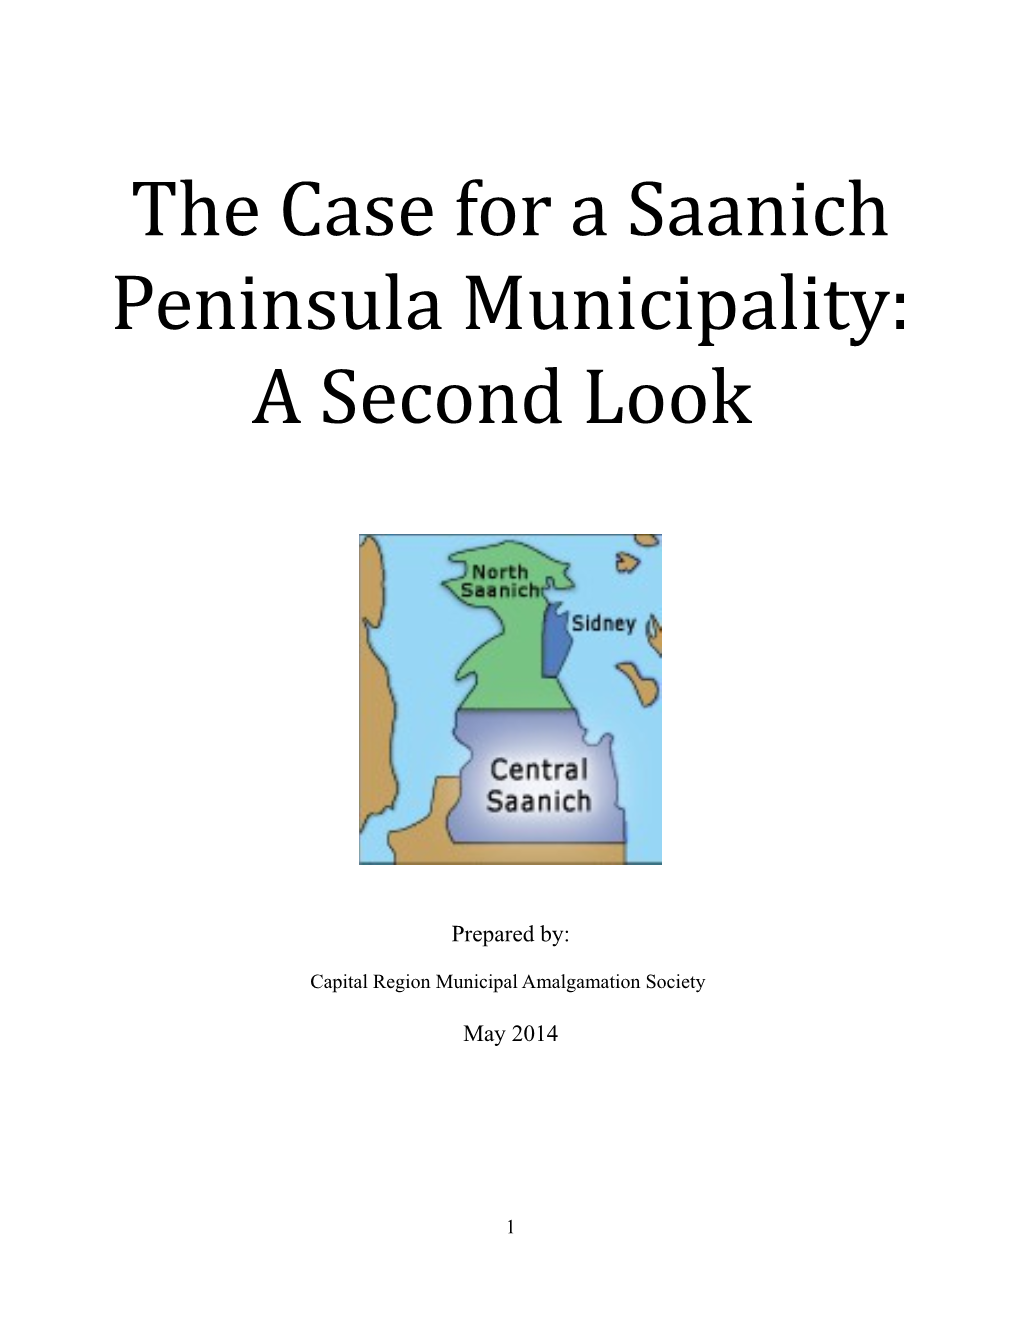 The Case for a Saanich Peninsula Municipality